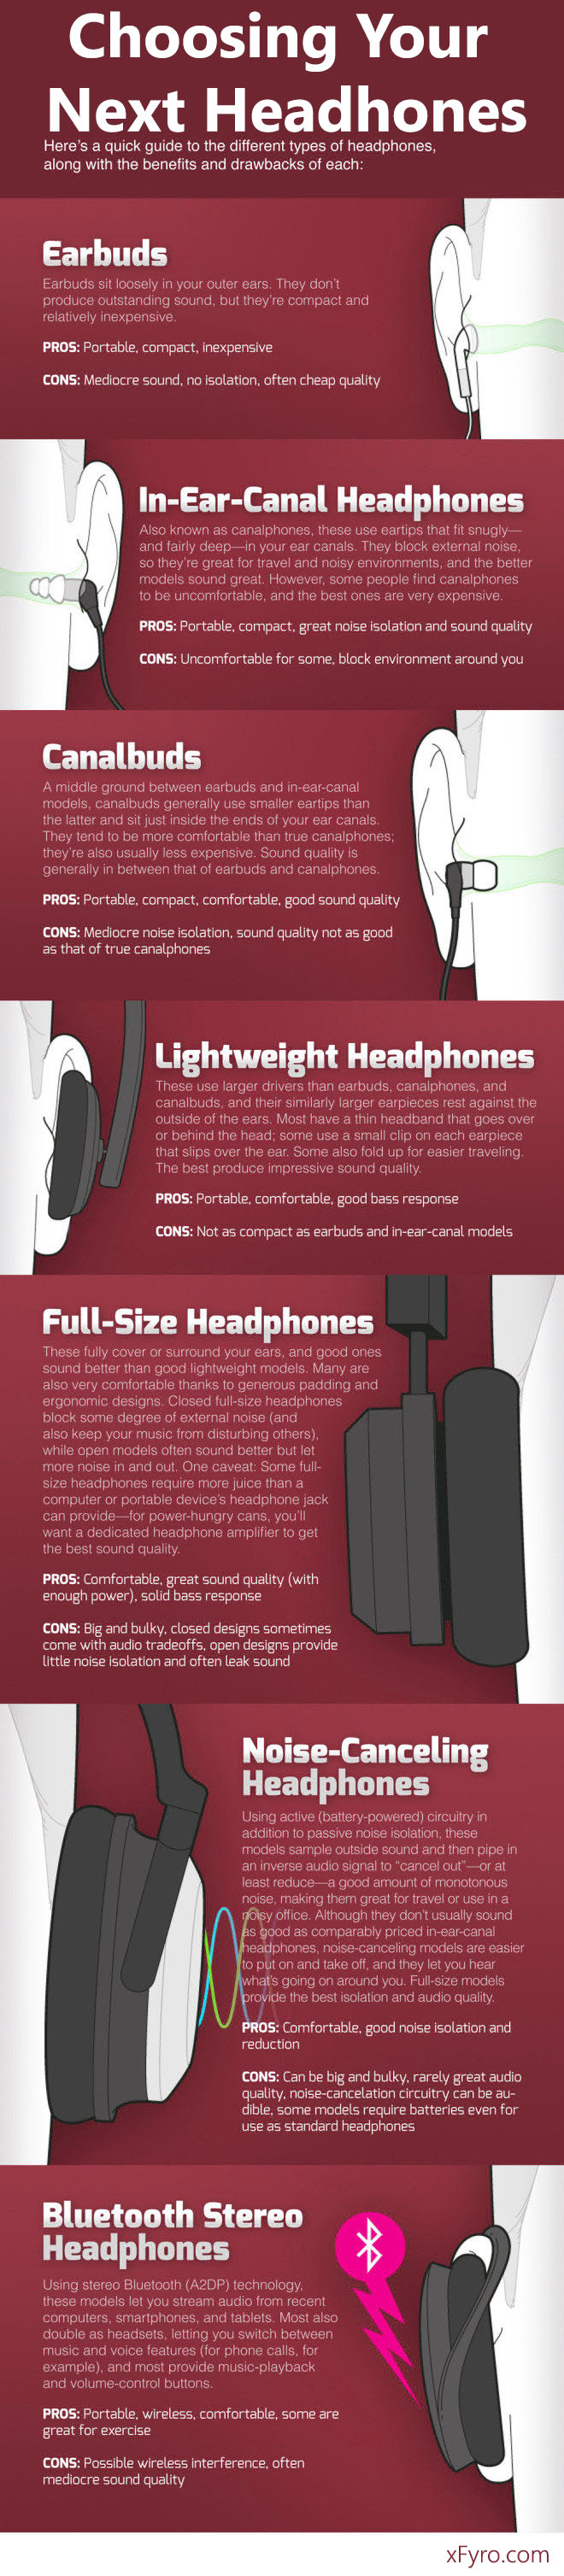 Bluetooth and Lighting Headphones.jpg  by xfyro25